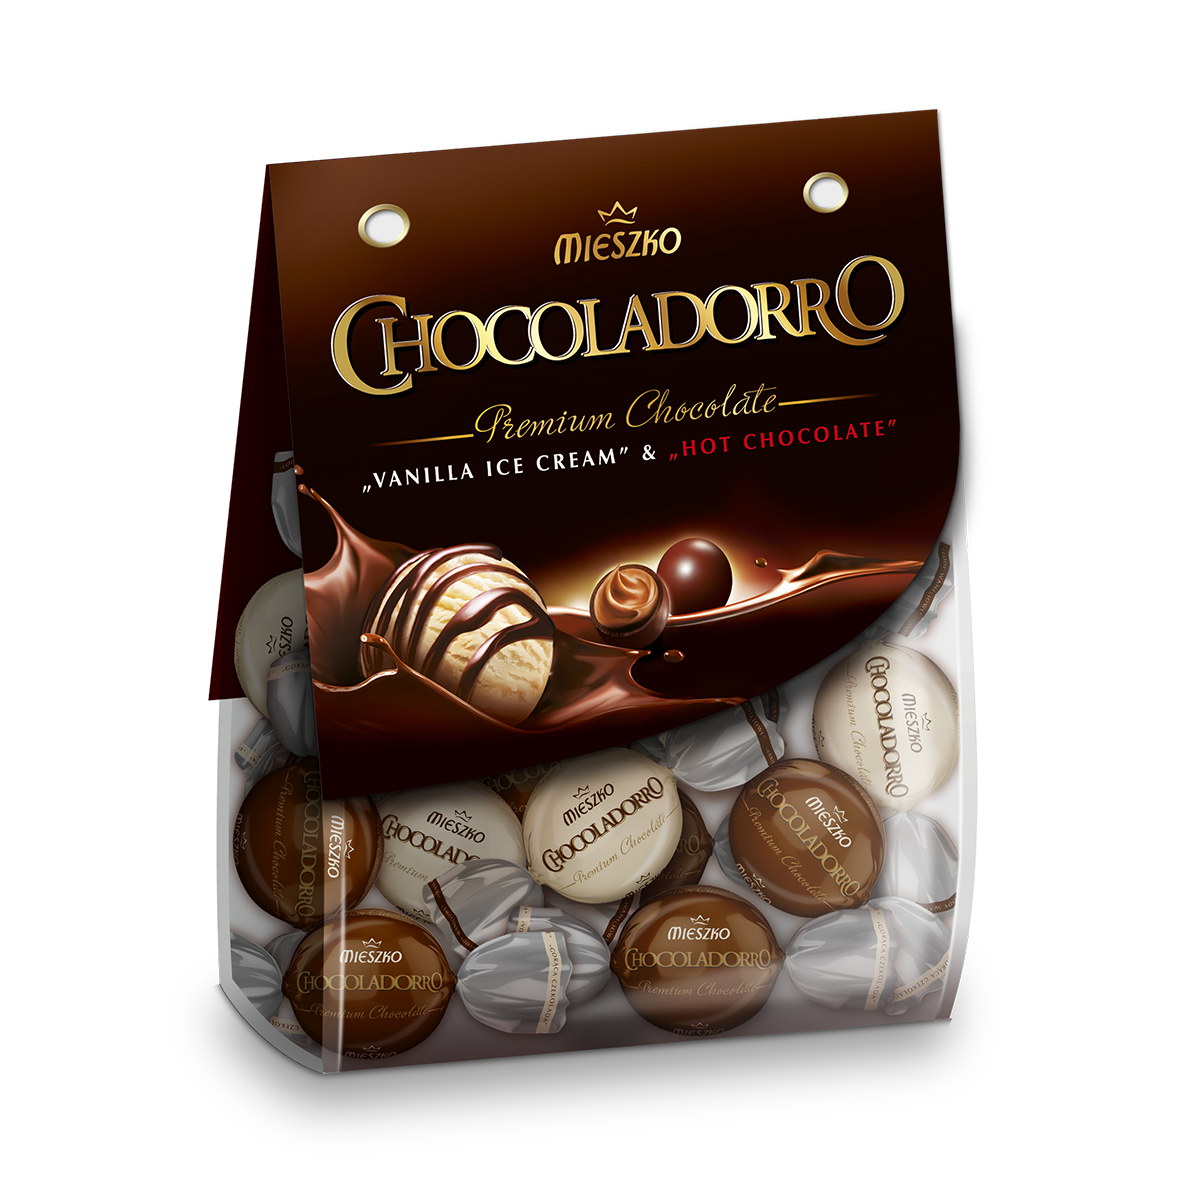 2020_09_02_chocoladorro_3